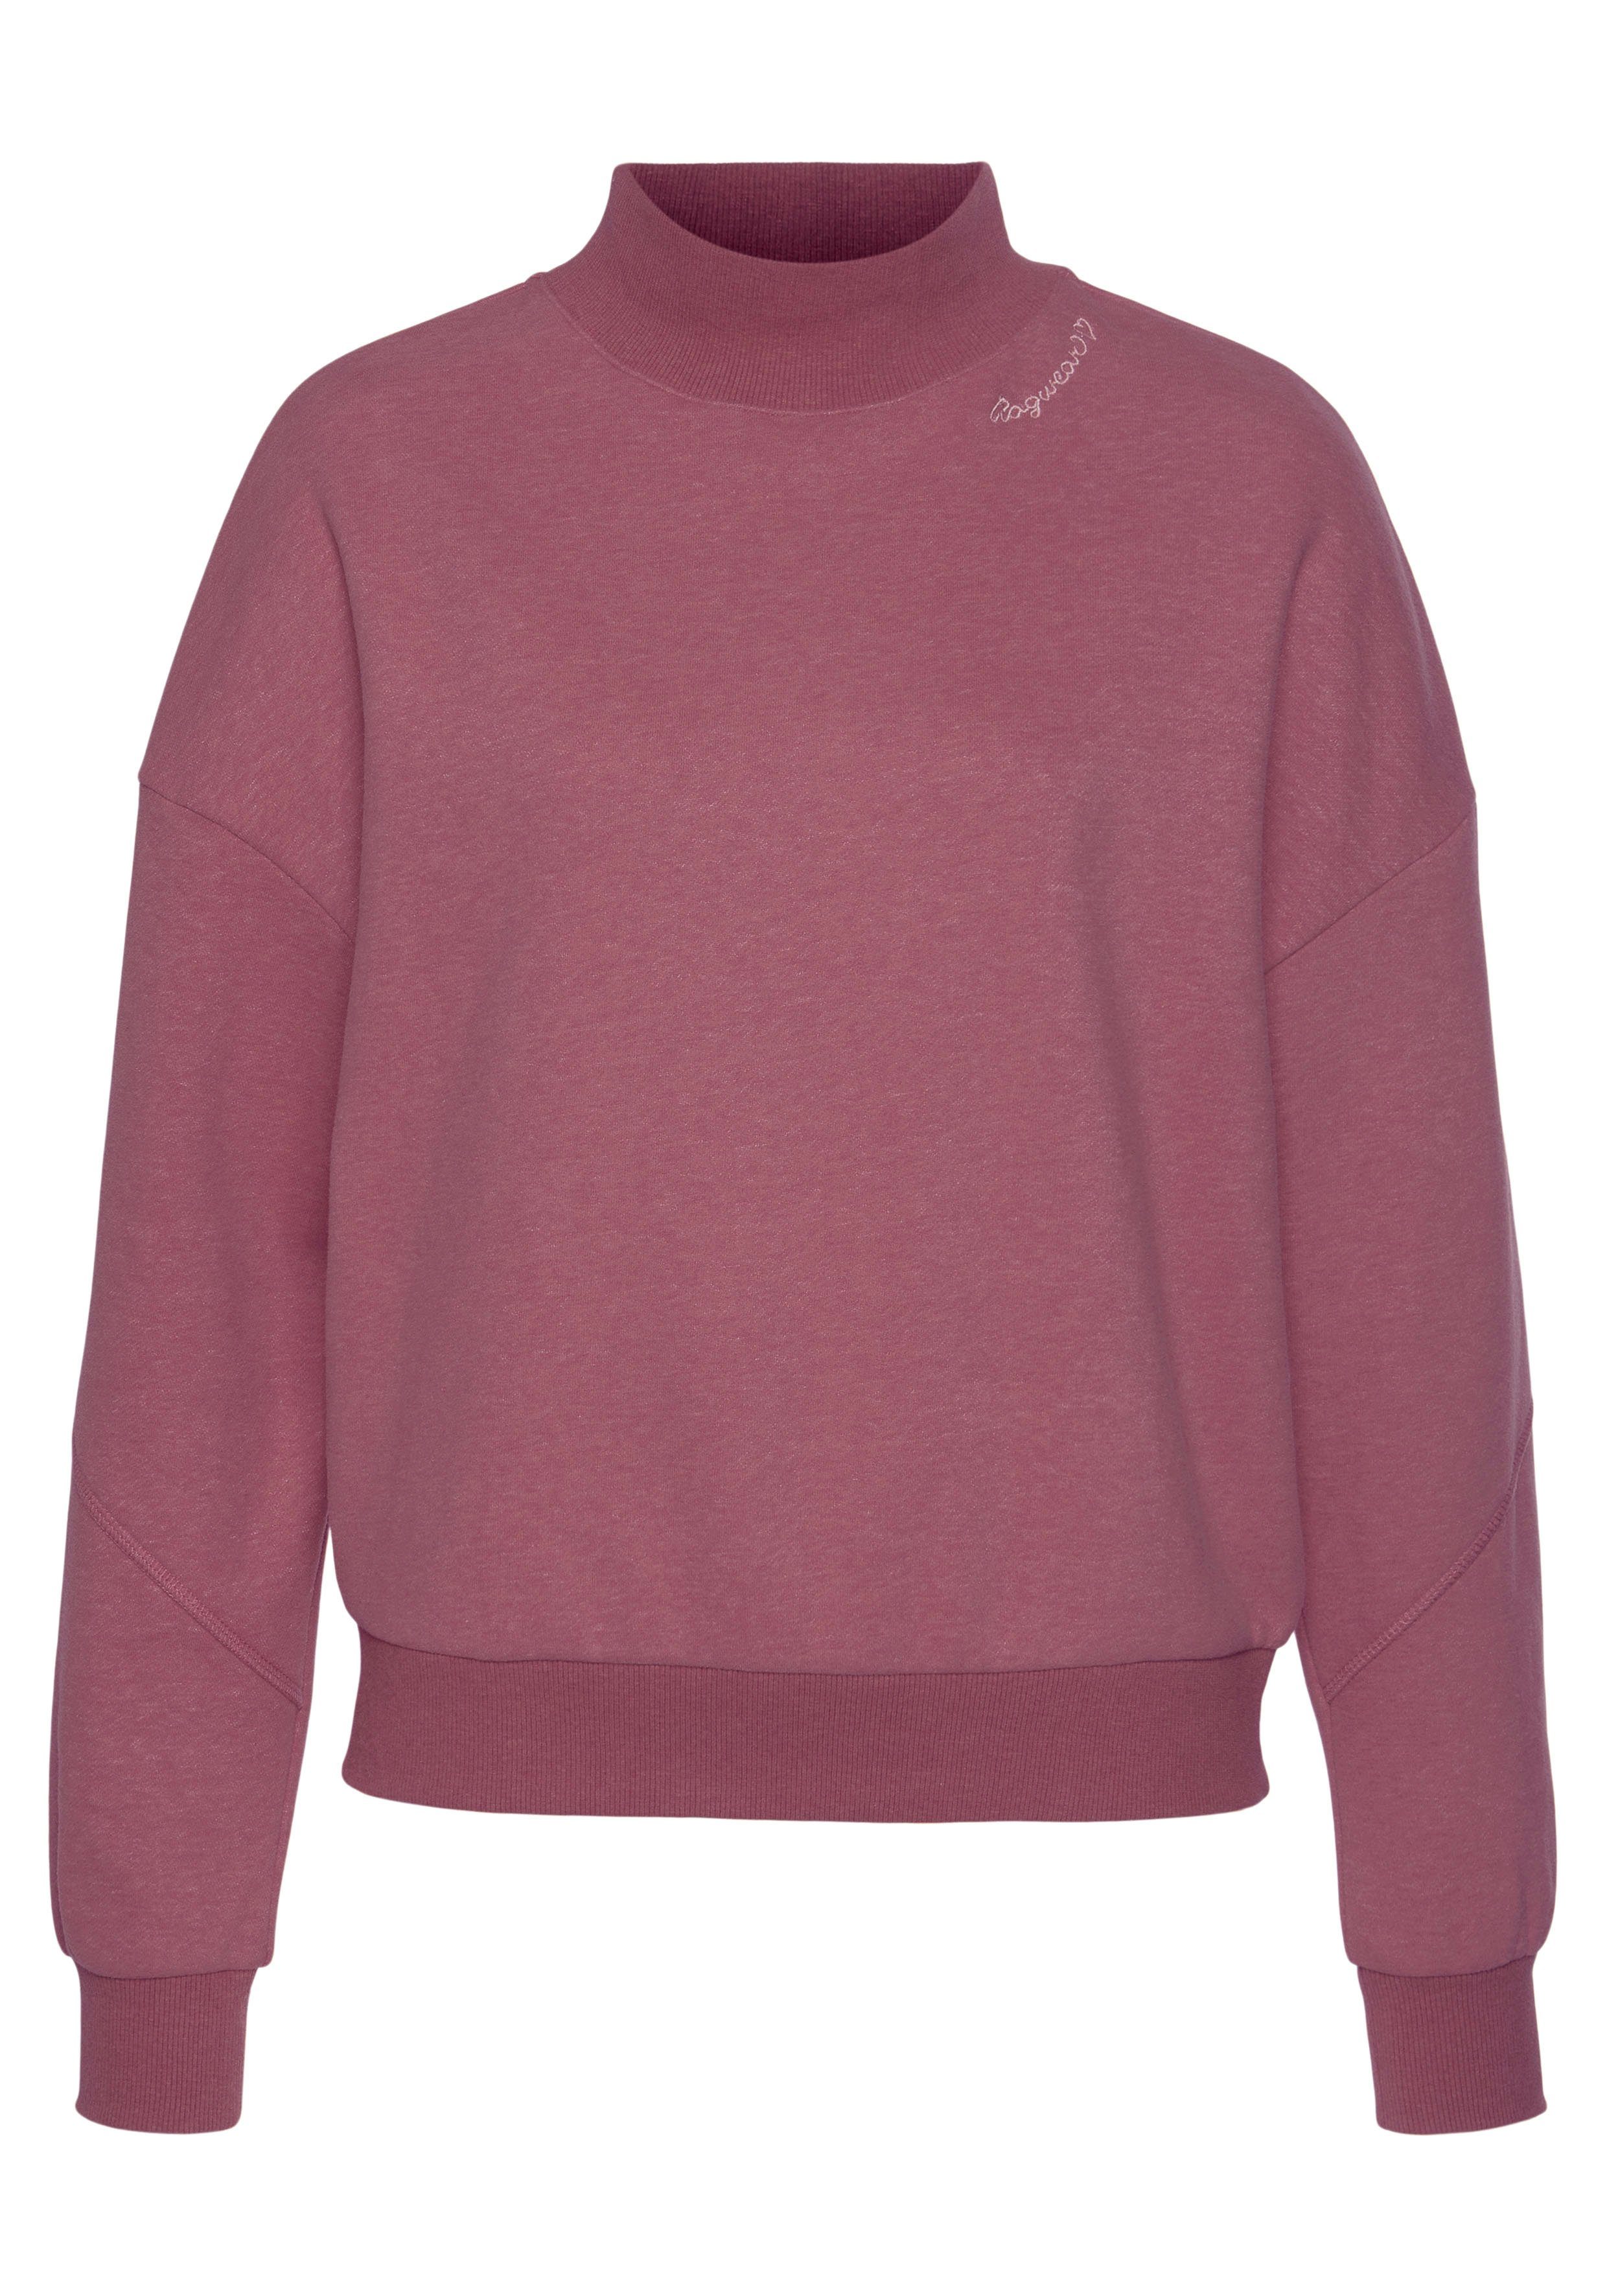 SWEAT plum Ragwear KAILA 2030 Sweater